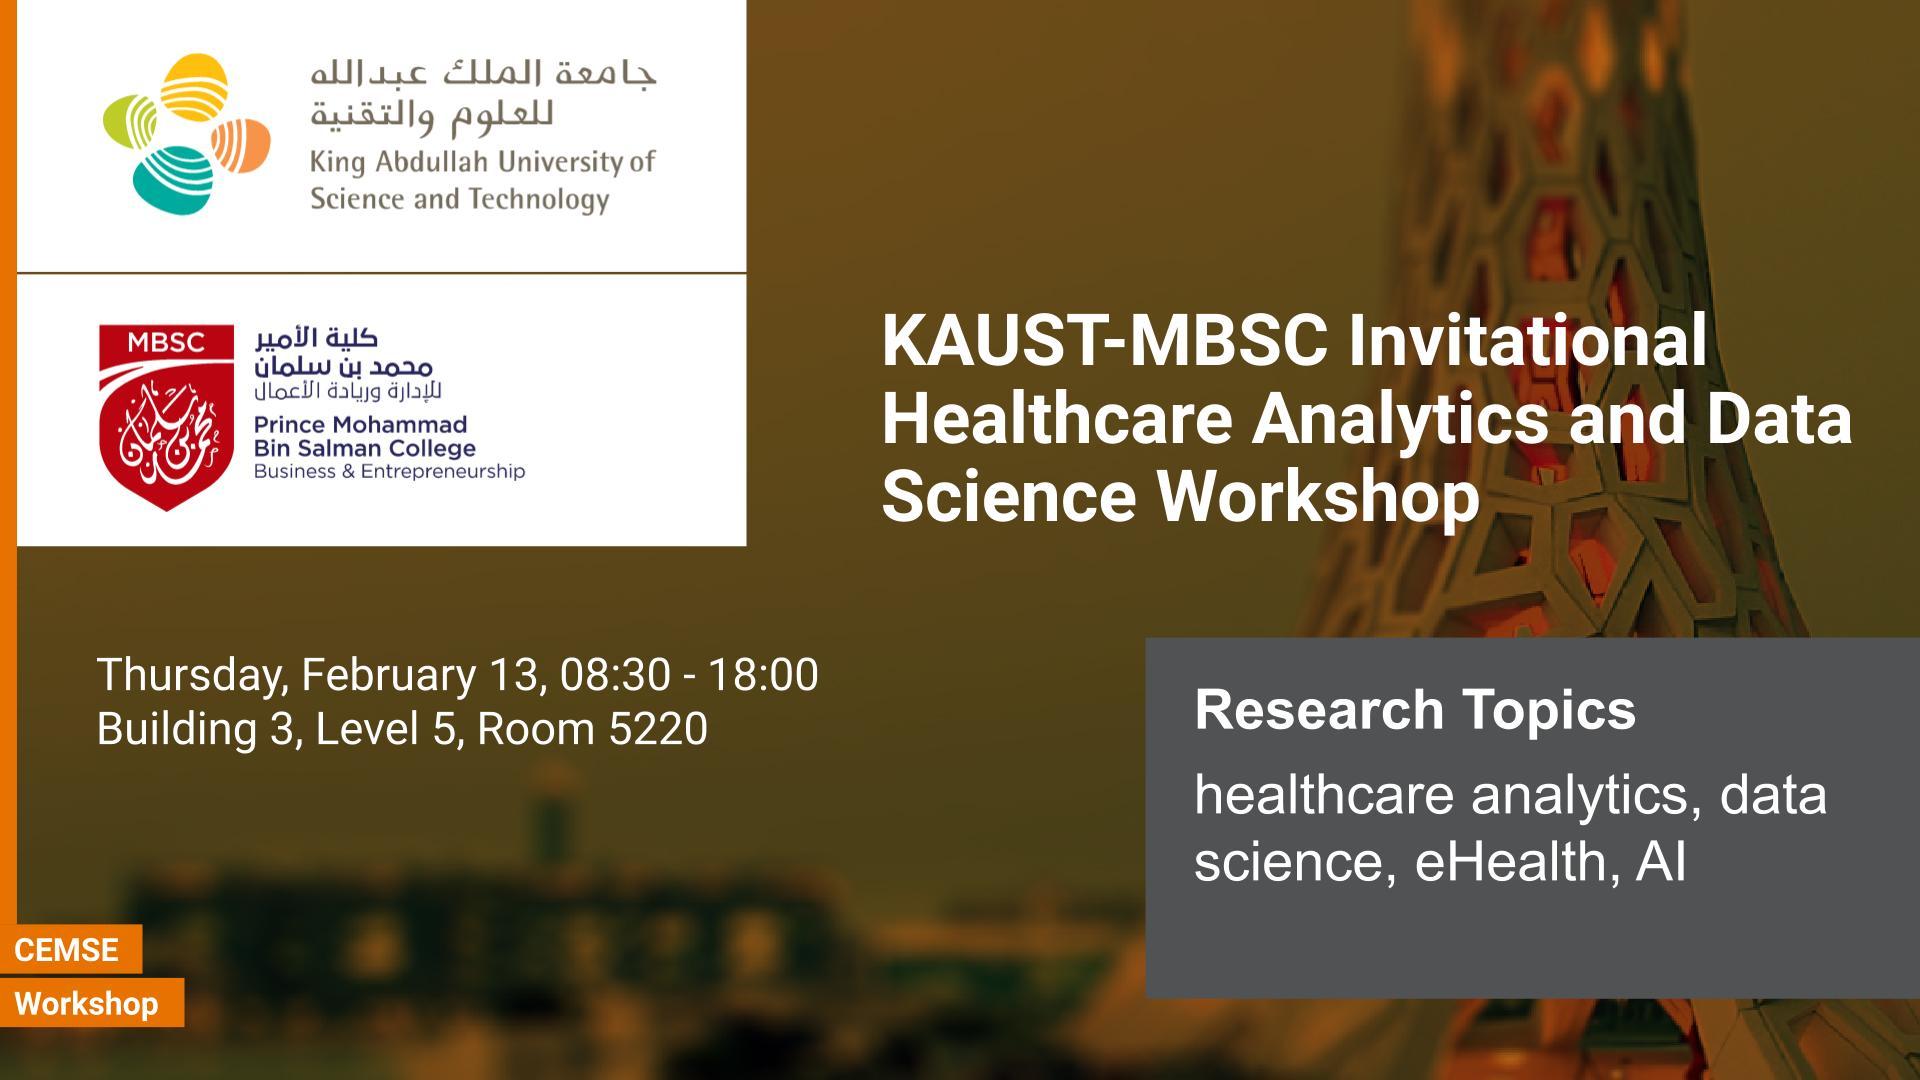 KAUST MBSC Invitational Healthcare Analytics and Data Science Workshop